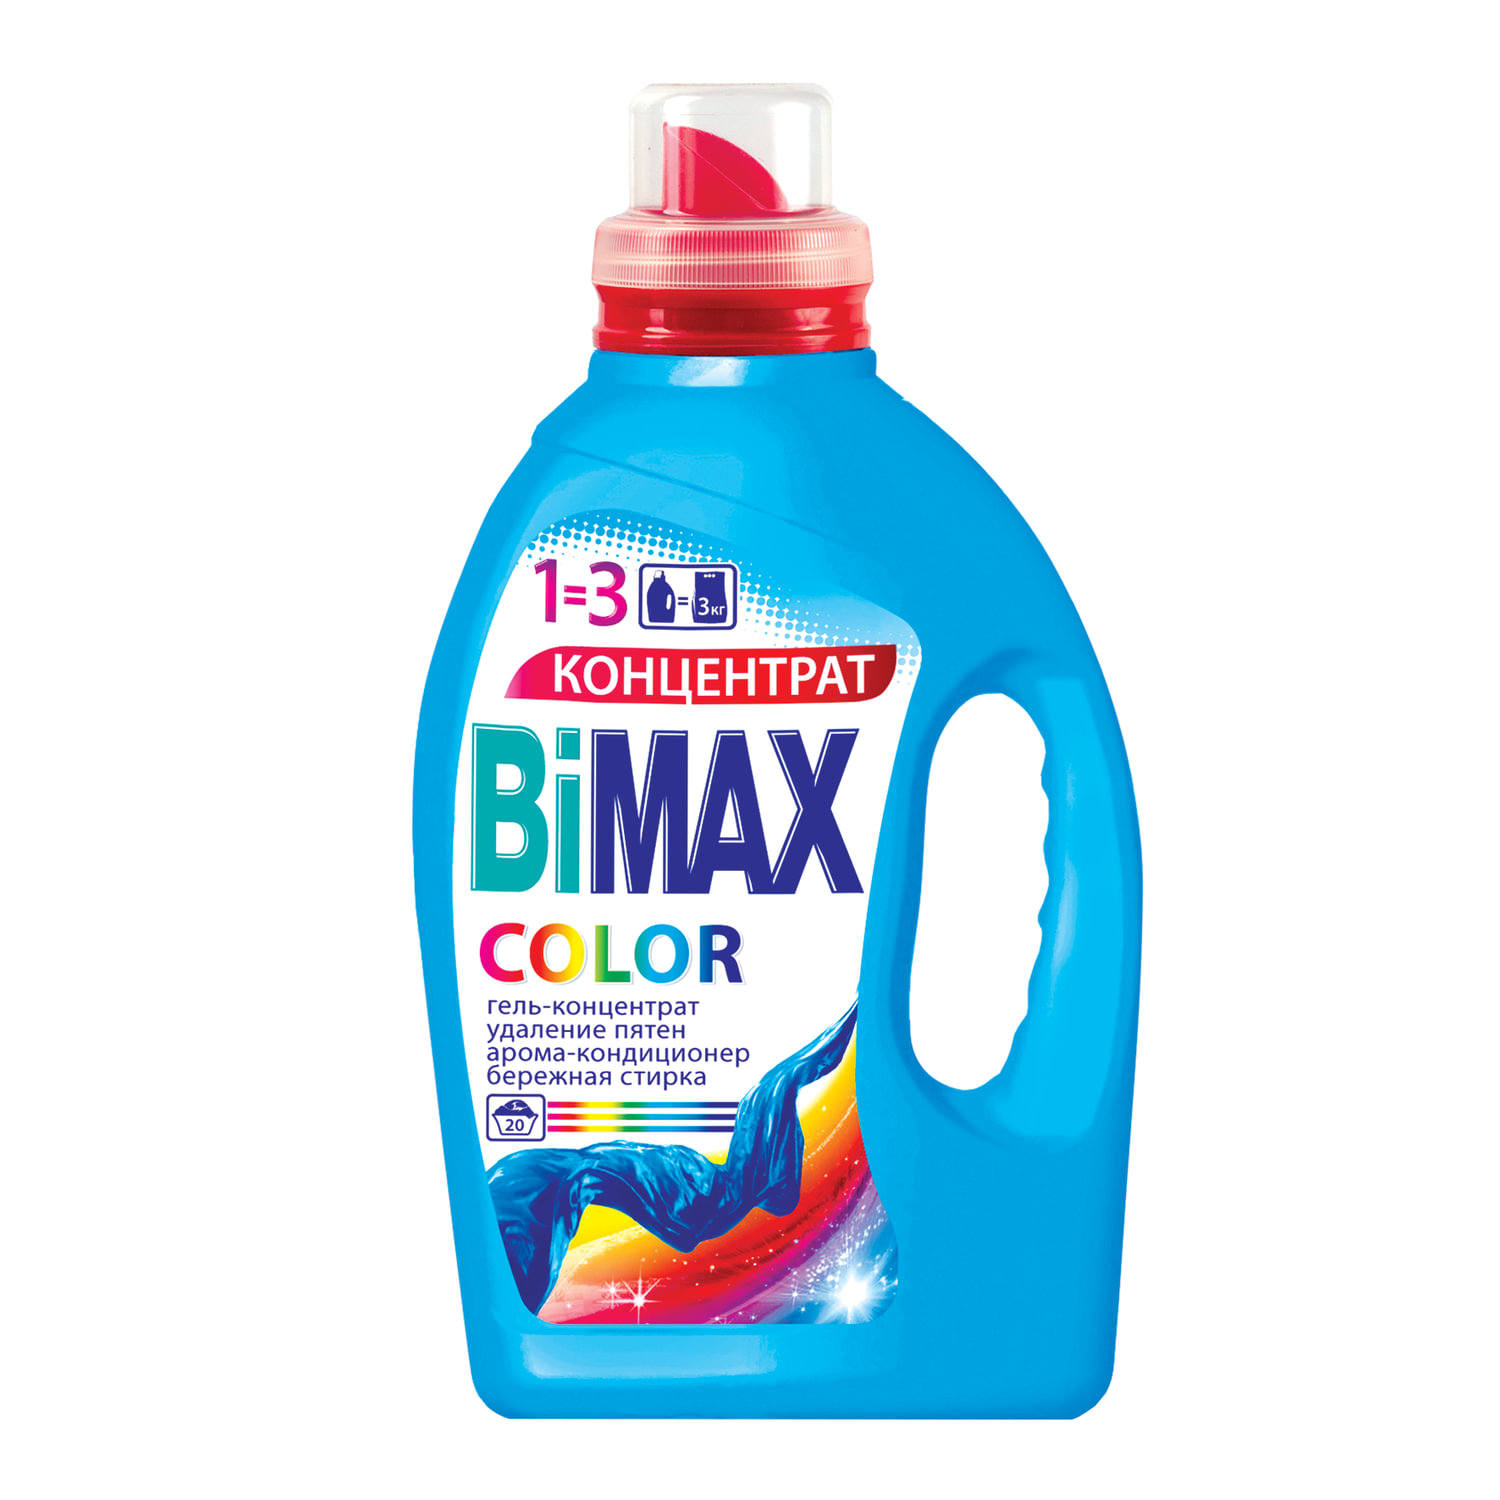 Для стирки спортмастер. BIMAX гель для стирки Color. Гель БИМАКС колор 1.3. BIMAX гель для стирки белья Color 1300мл. Гель д/стирки BIMAX эко концентрат колор 1,2кг.